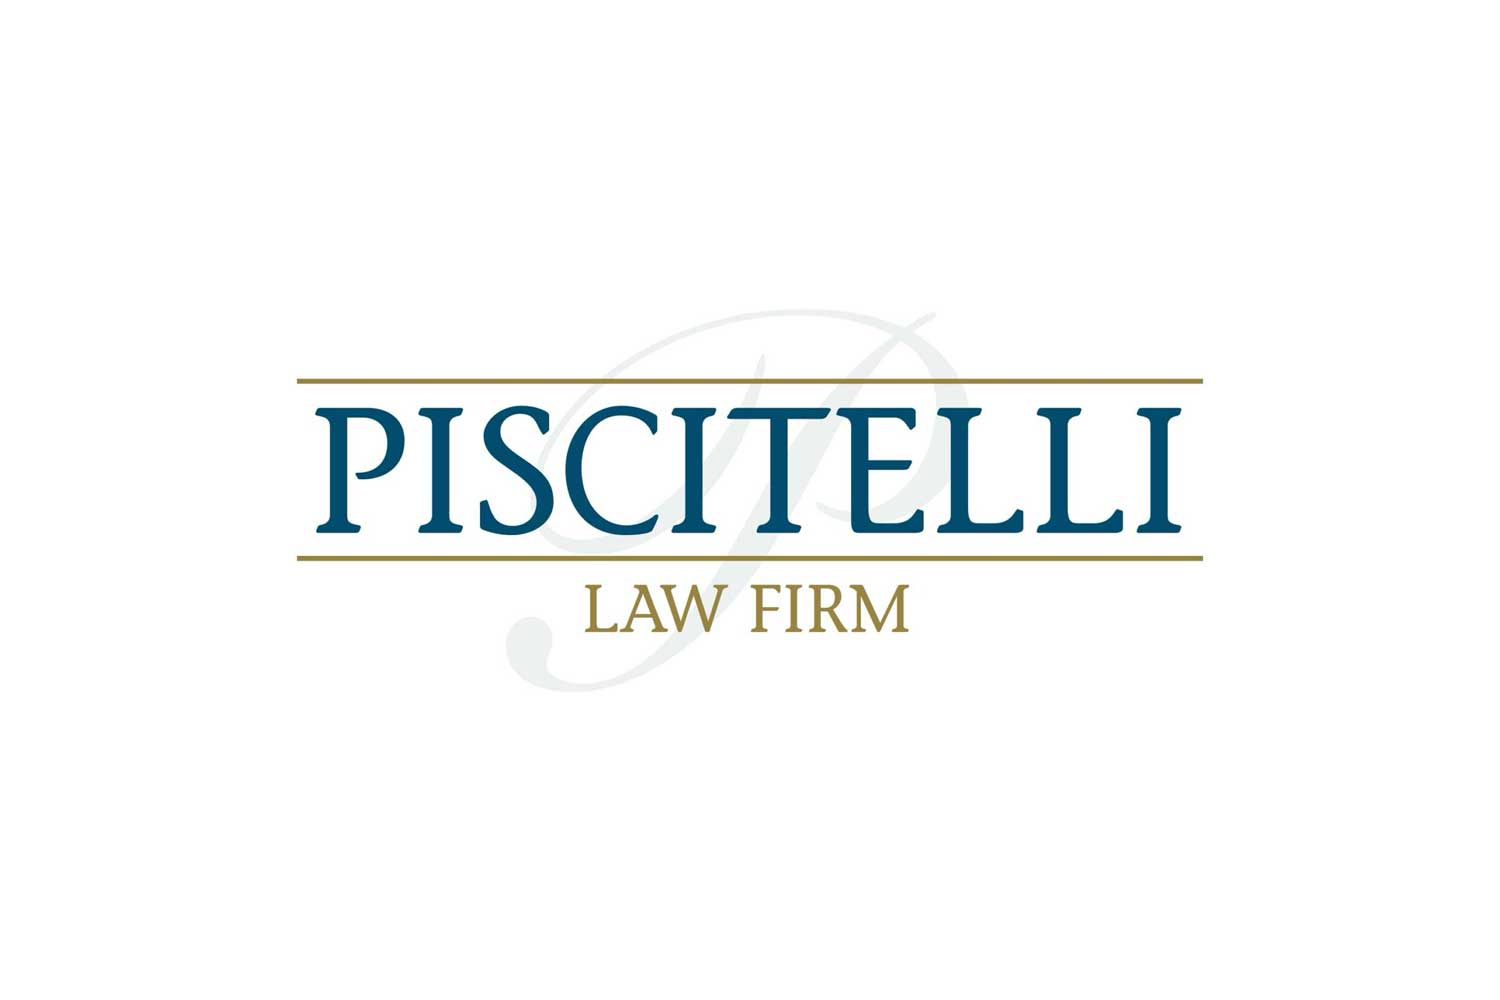 Piscitelli Law Firm logo.